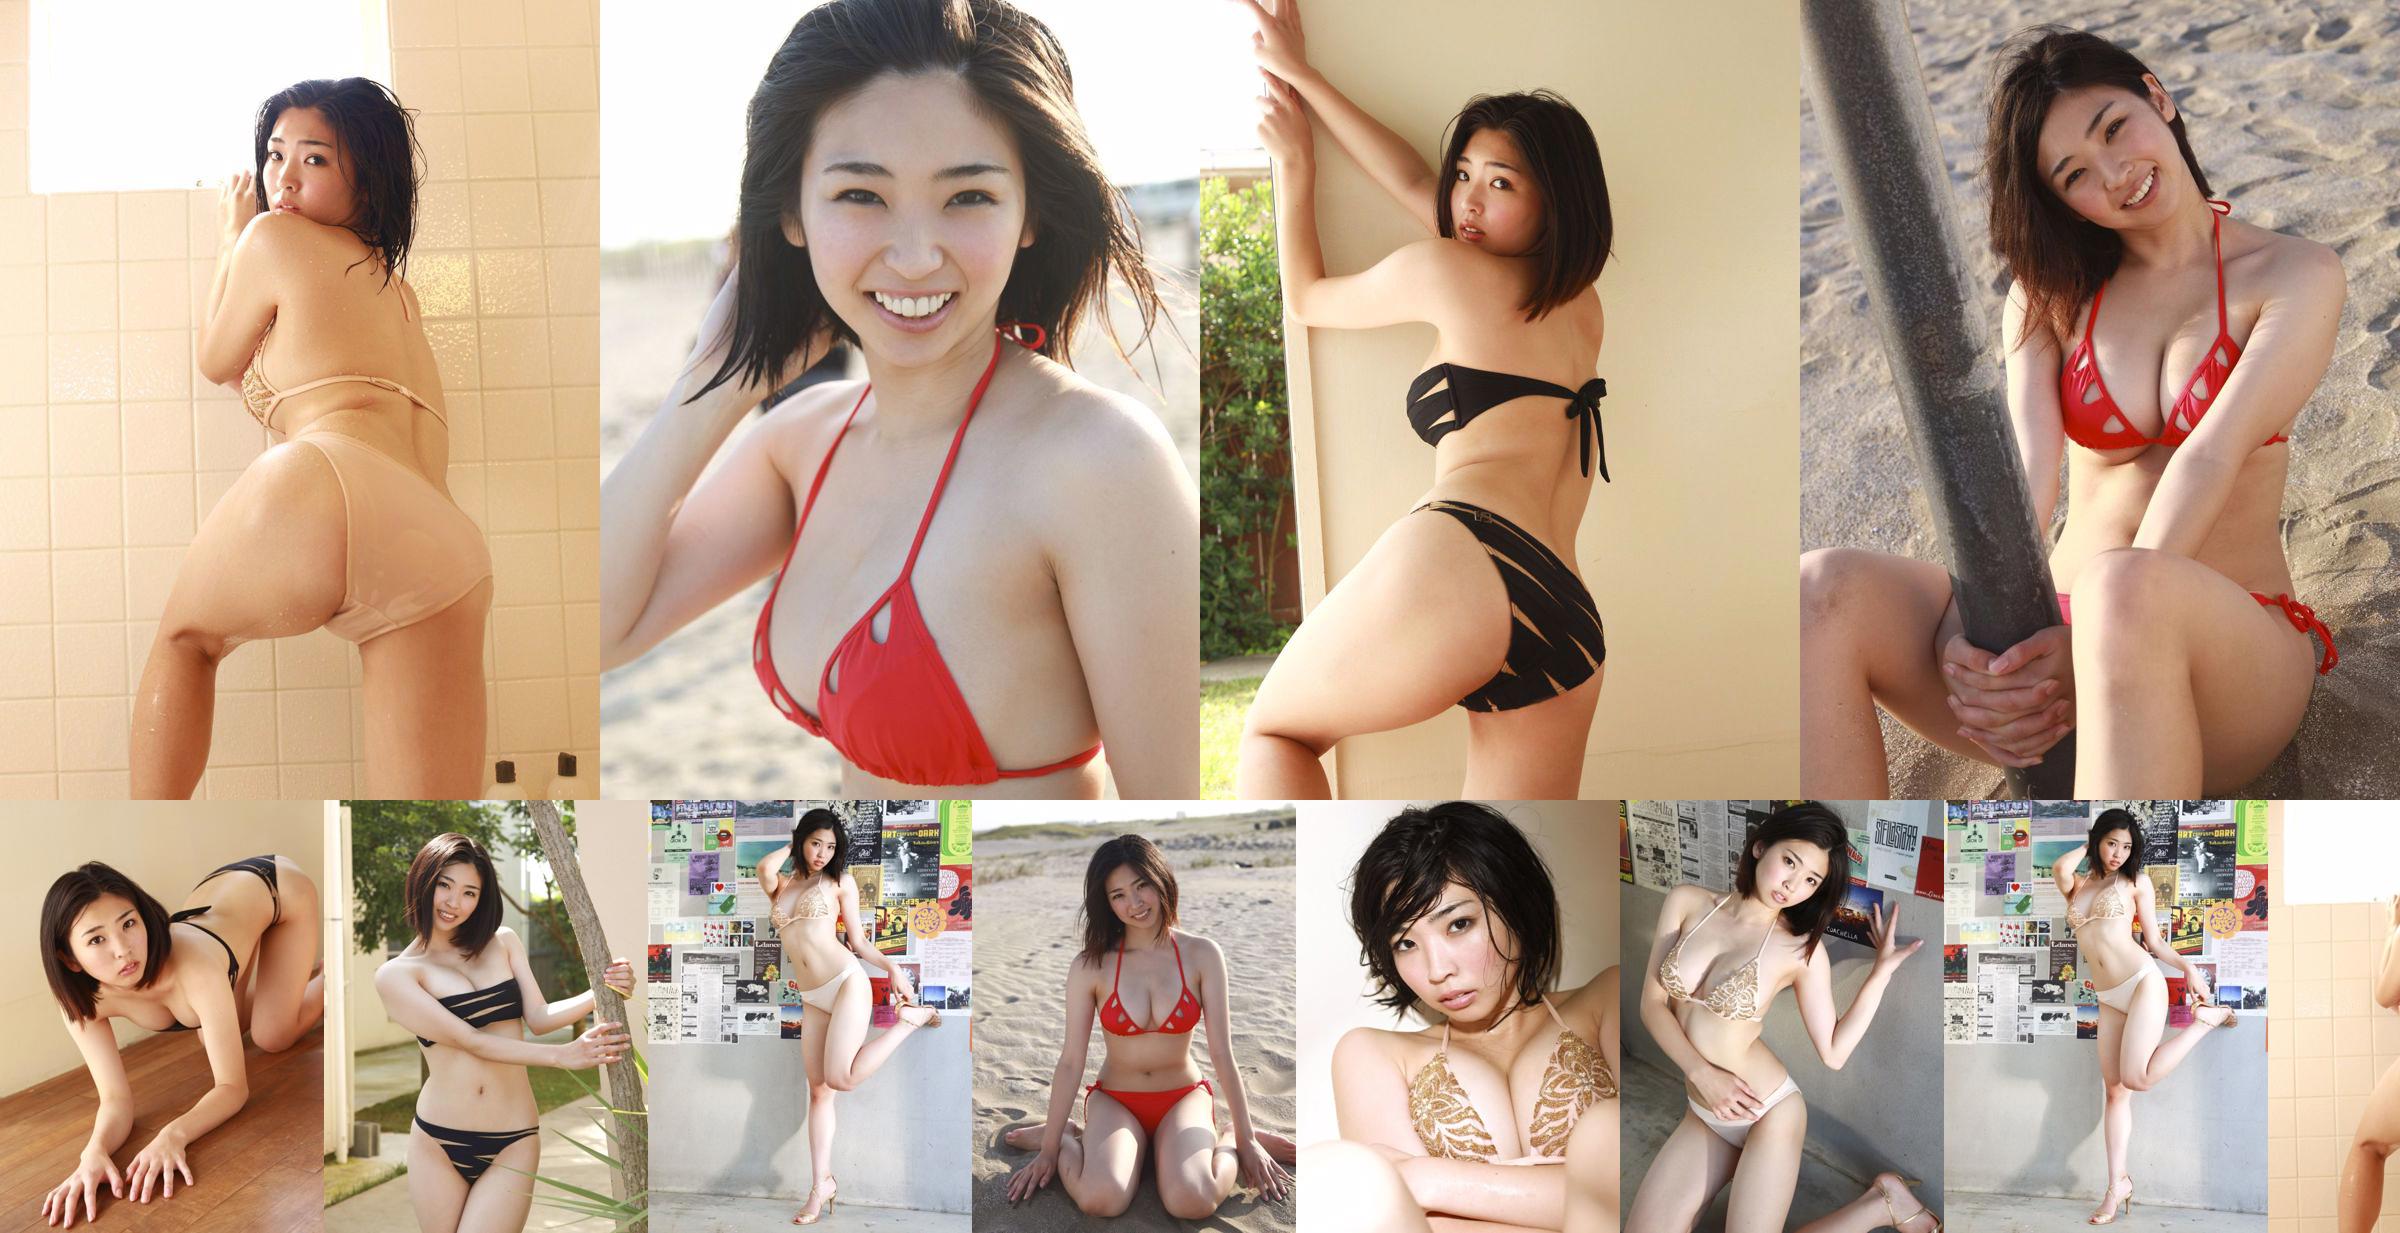 Natsuki Hyuga "Memories of summer" [Sabra.net] StriCtly Girls No.79b6bf Page 1